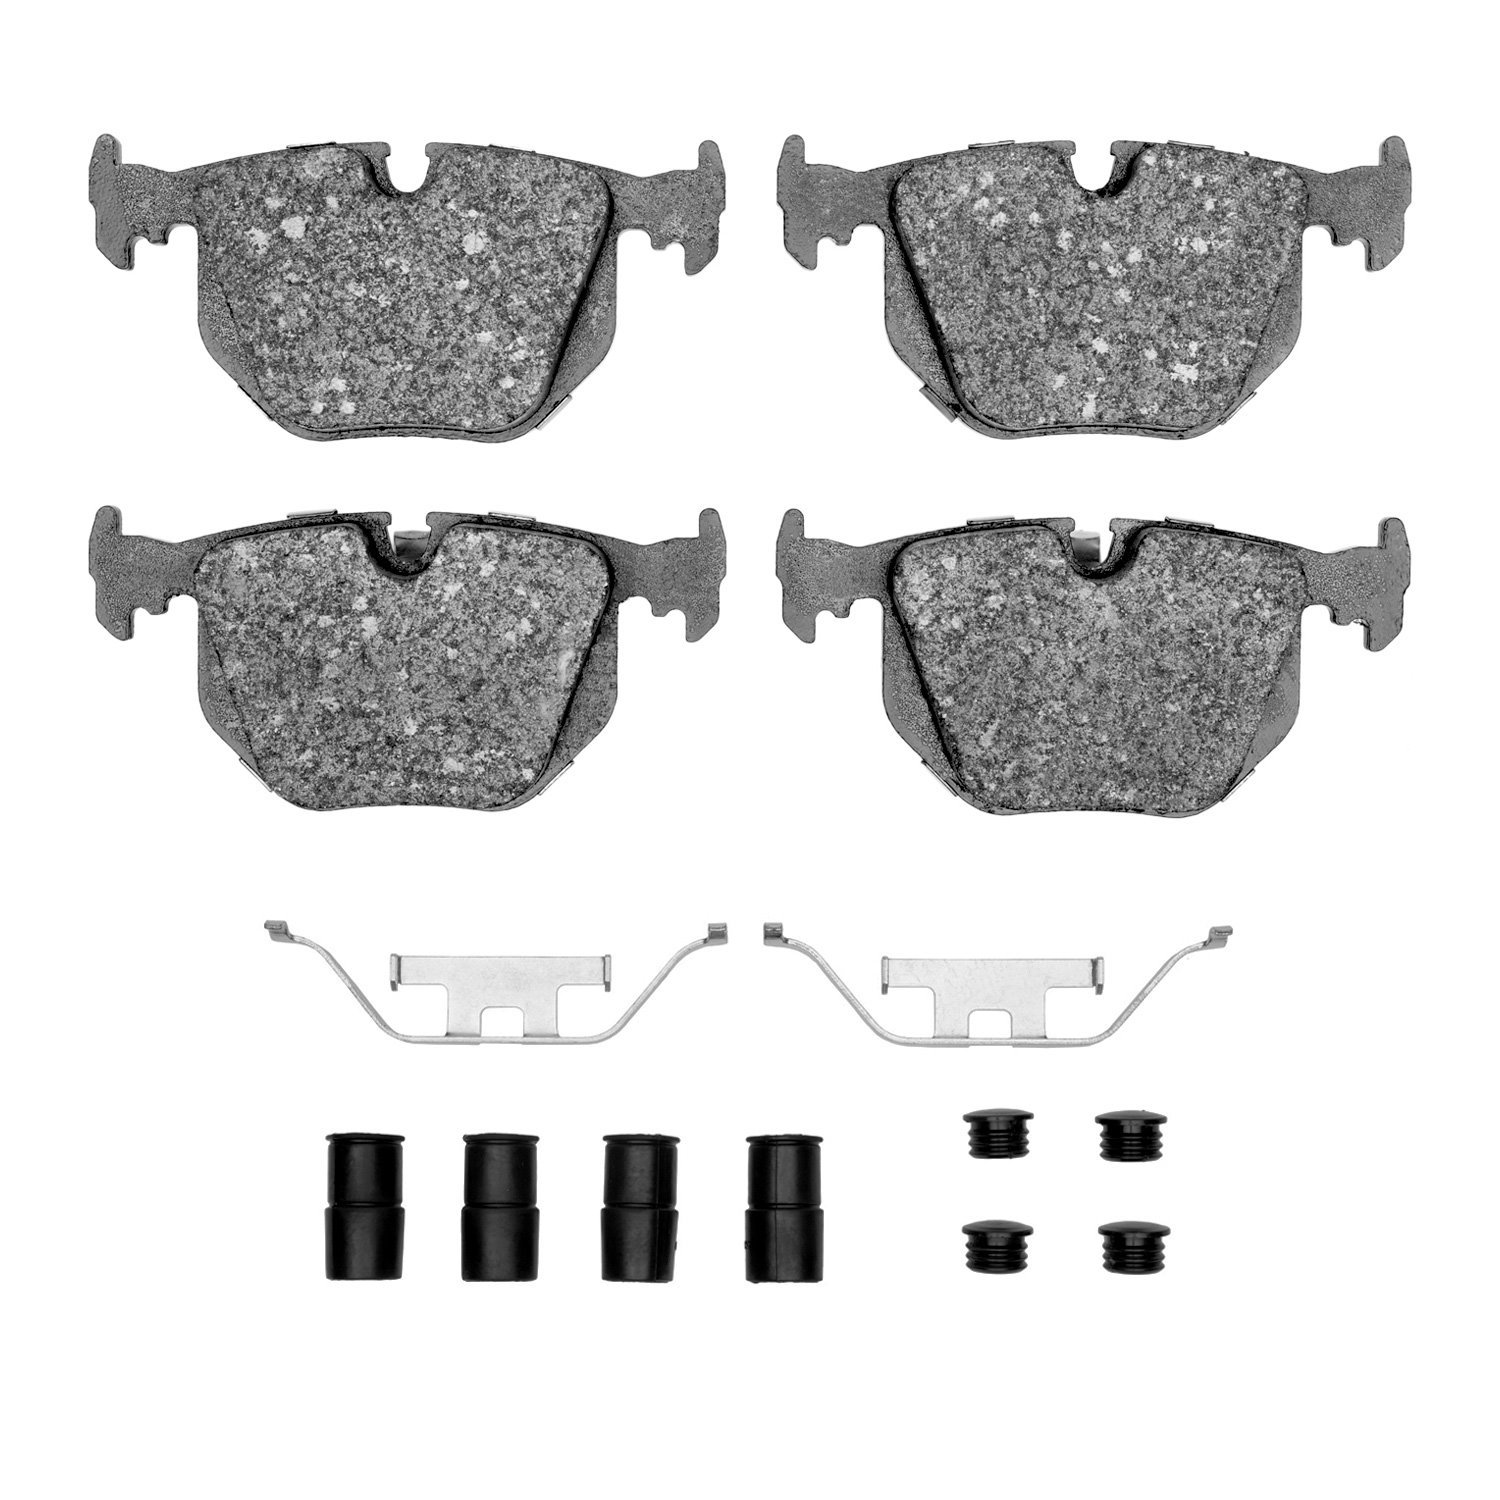 1551-0683-01 5000 Advanced Low-Metallic Brake Pads & Hardware Kit, 1991-2008 Multiple Makes/Models, Position: Rear